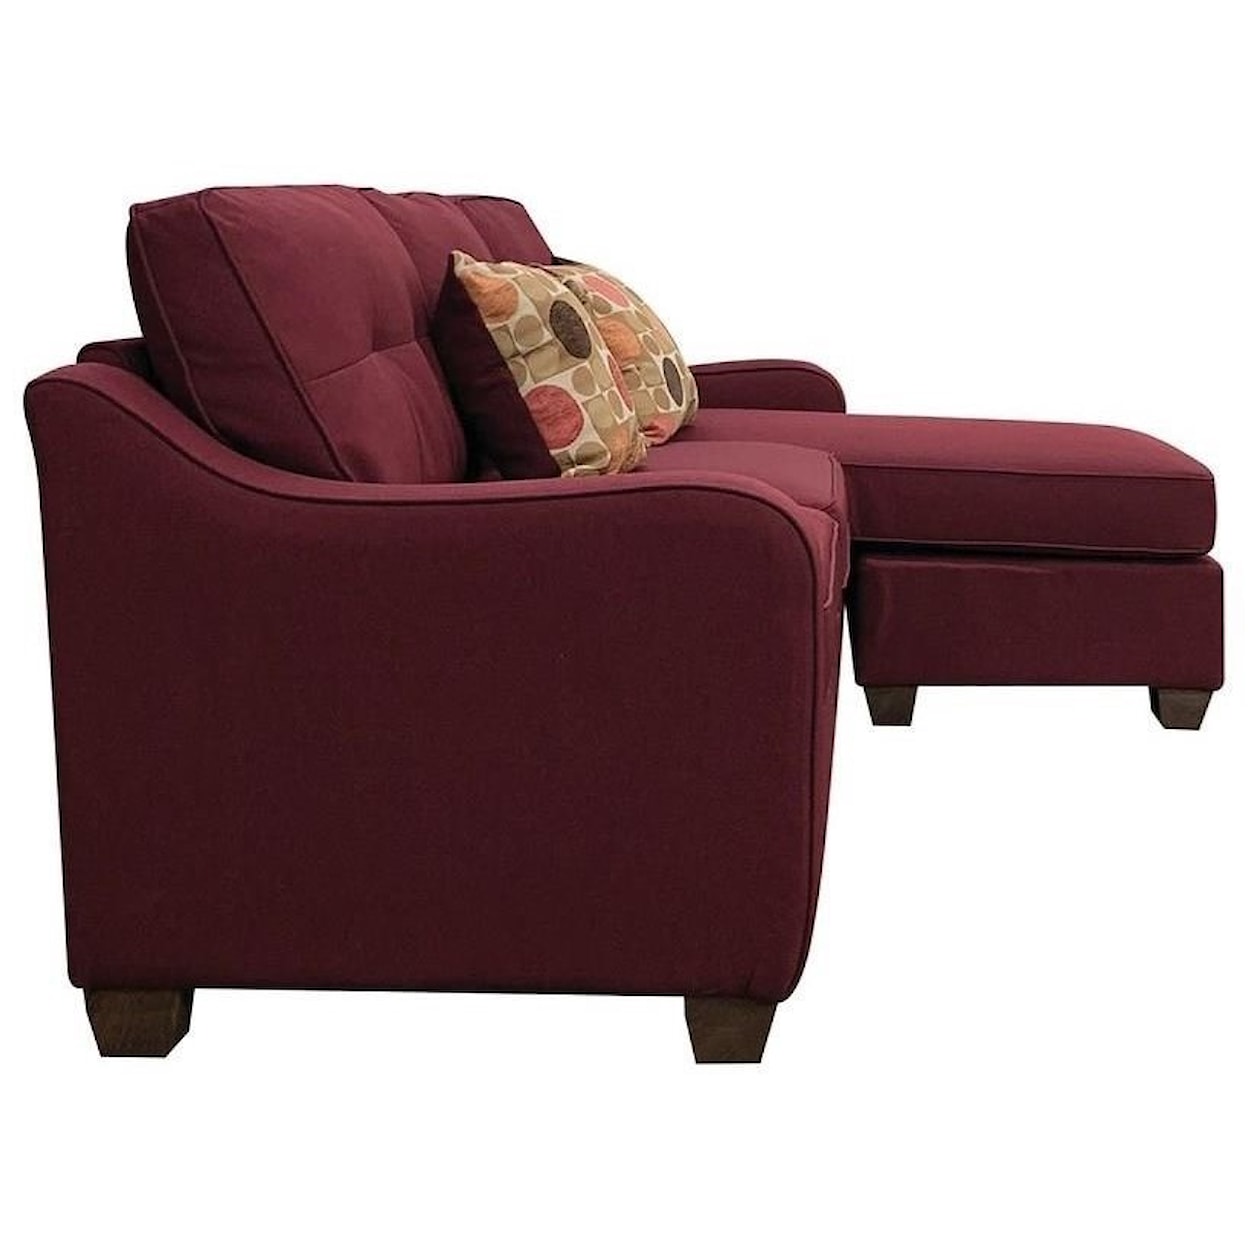 Acme Furniture Cleavon II Sectional Sofa (Rev. Chaise) & 2 Pillows